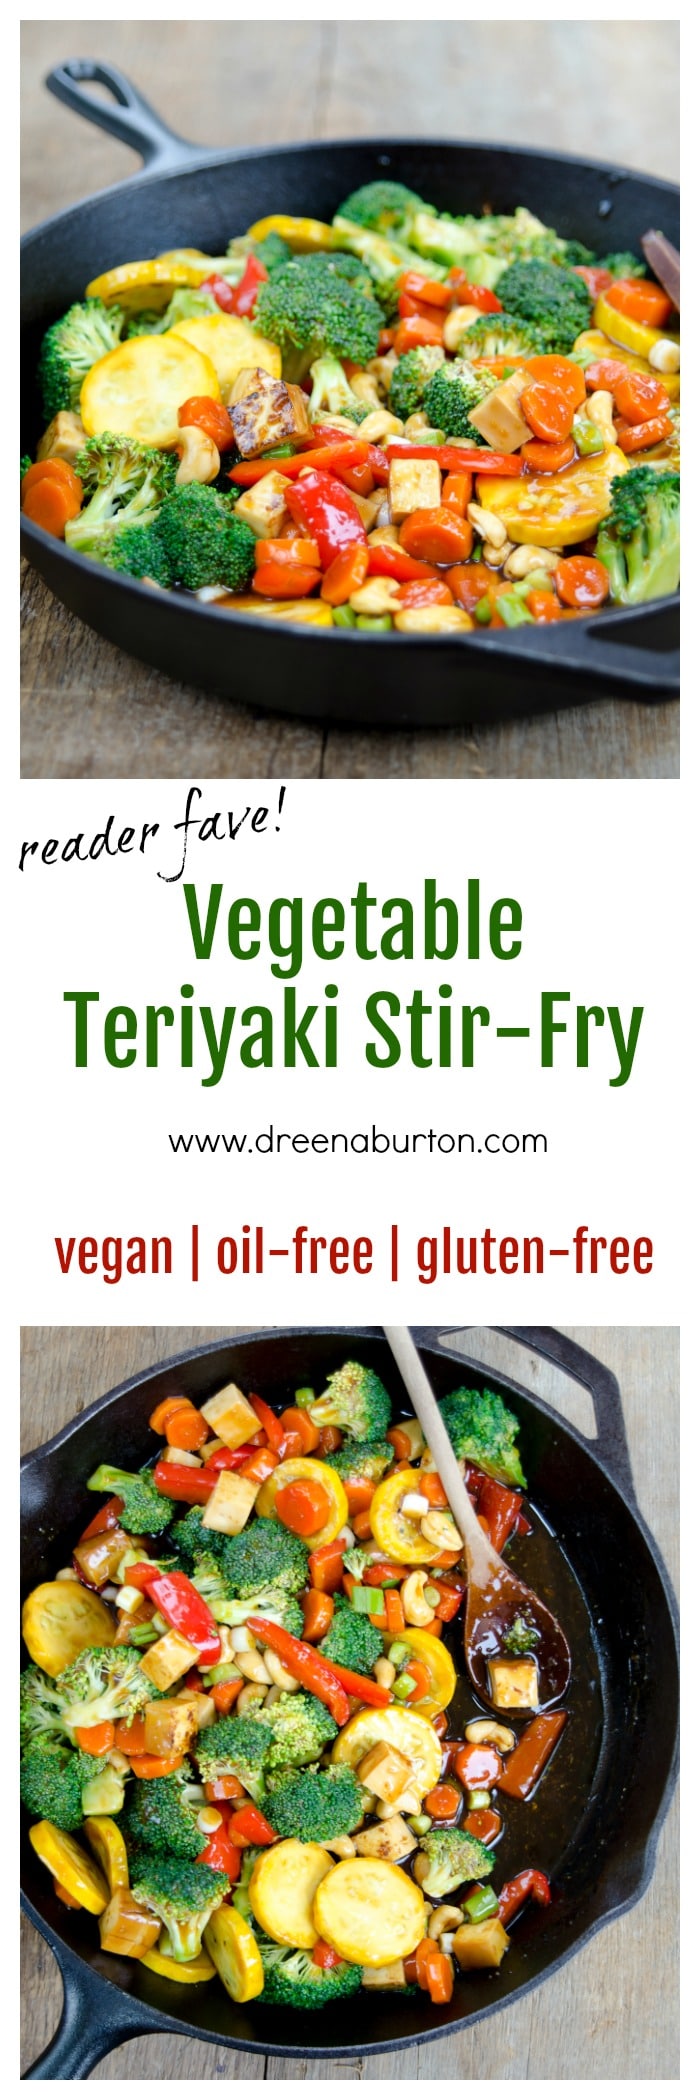 Reader FAVORITE - "better than takeout" Vegetable Teriyaki Stir-Fry #vegan #glutenfree #oilfree www.dreenaburton.com